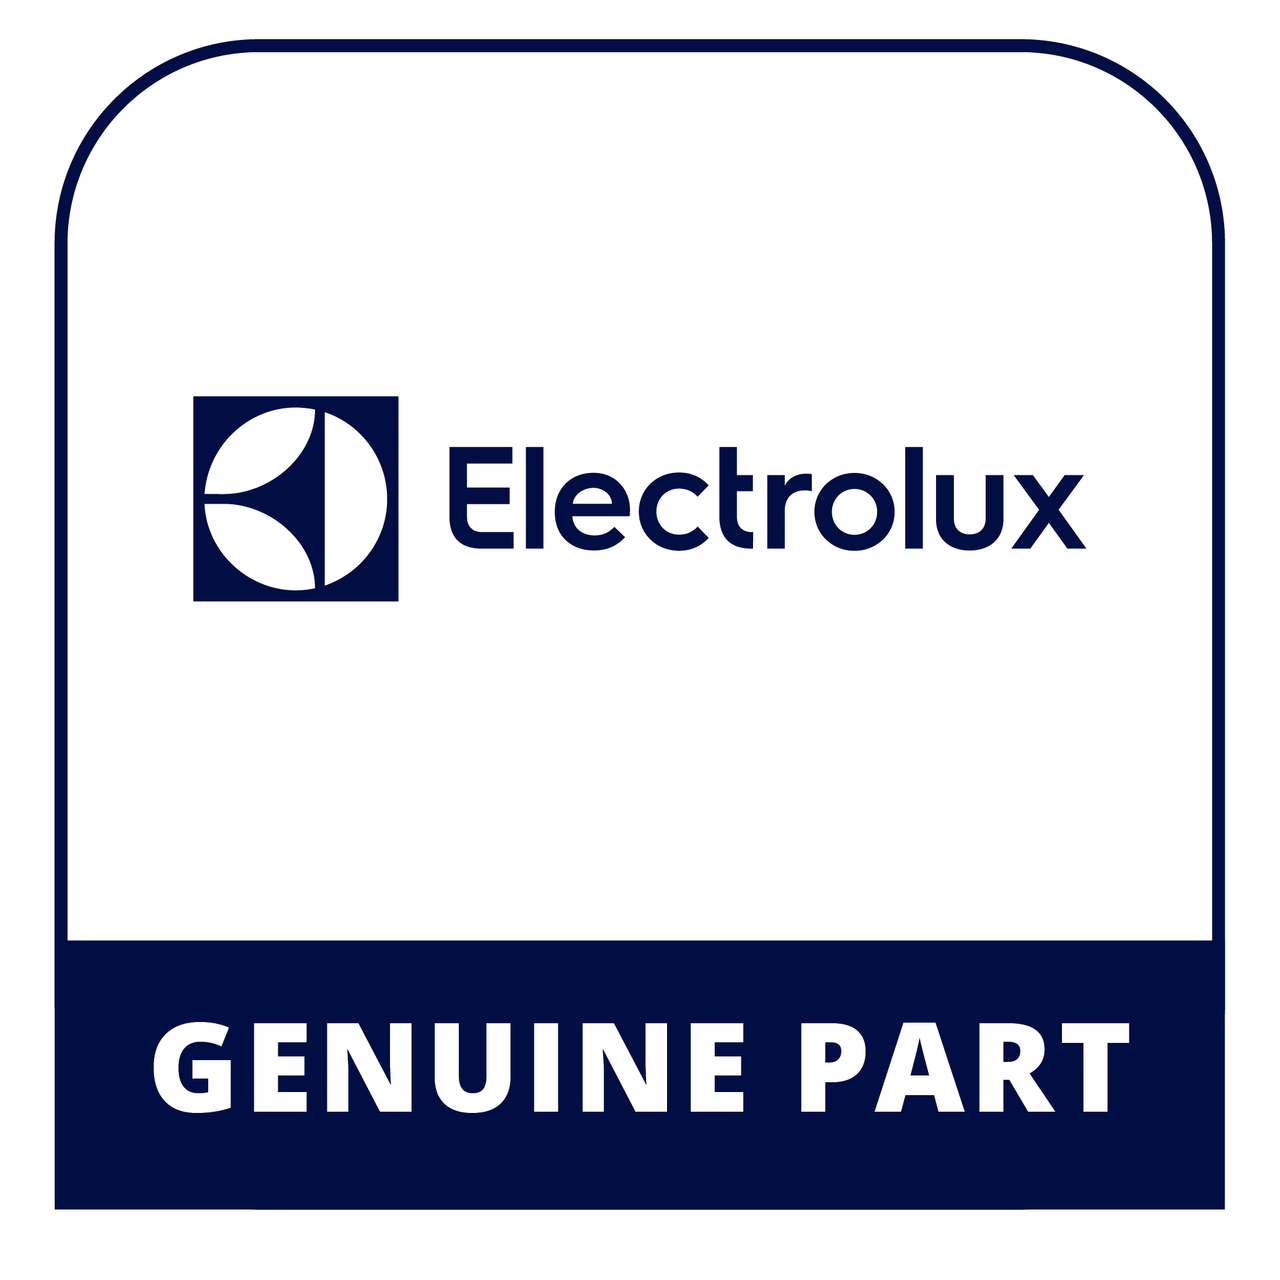 Frigidaire - Electrolux 316230708 Shield - Genuine Electrolux Part